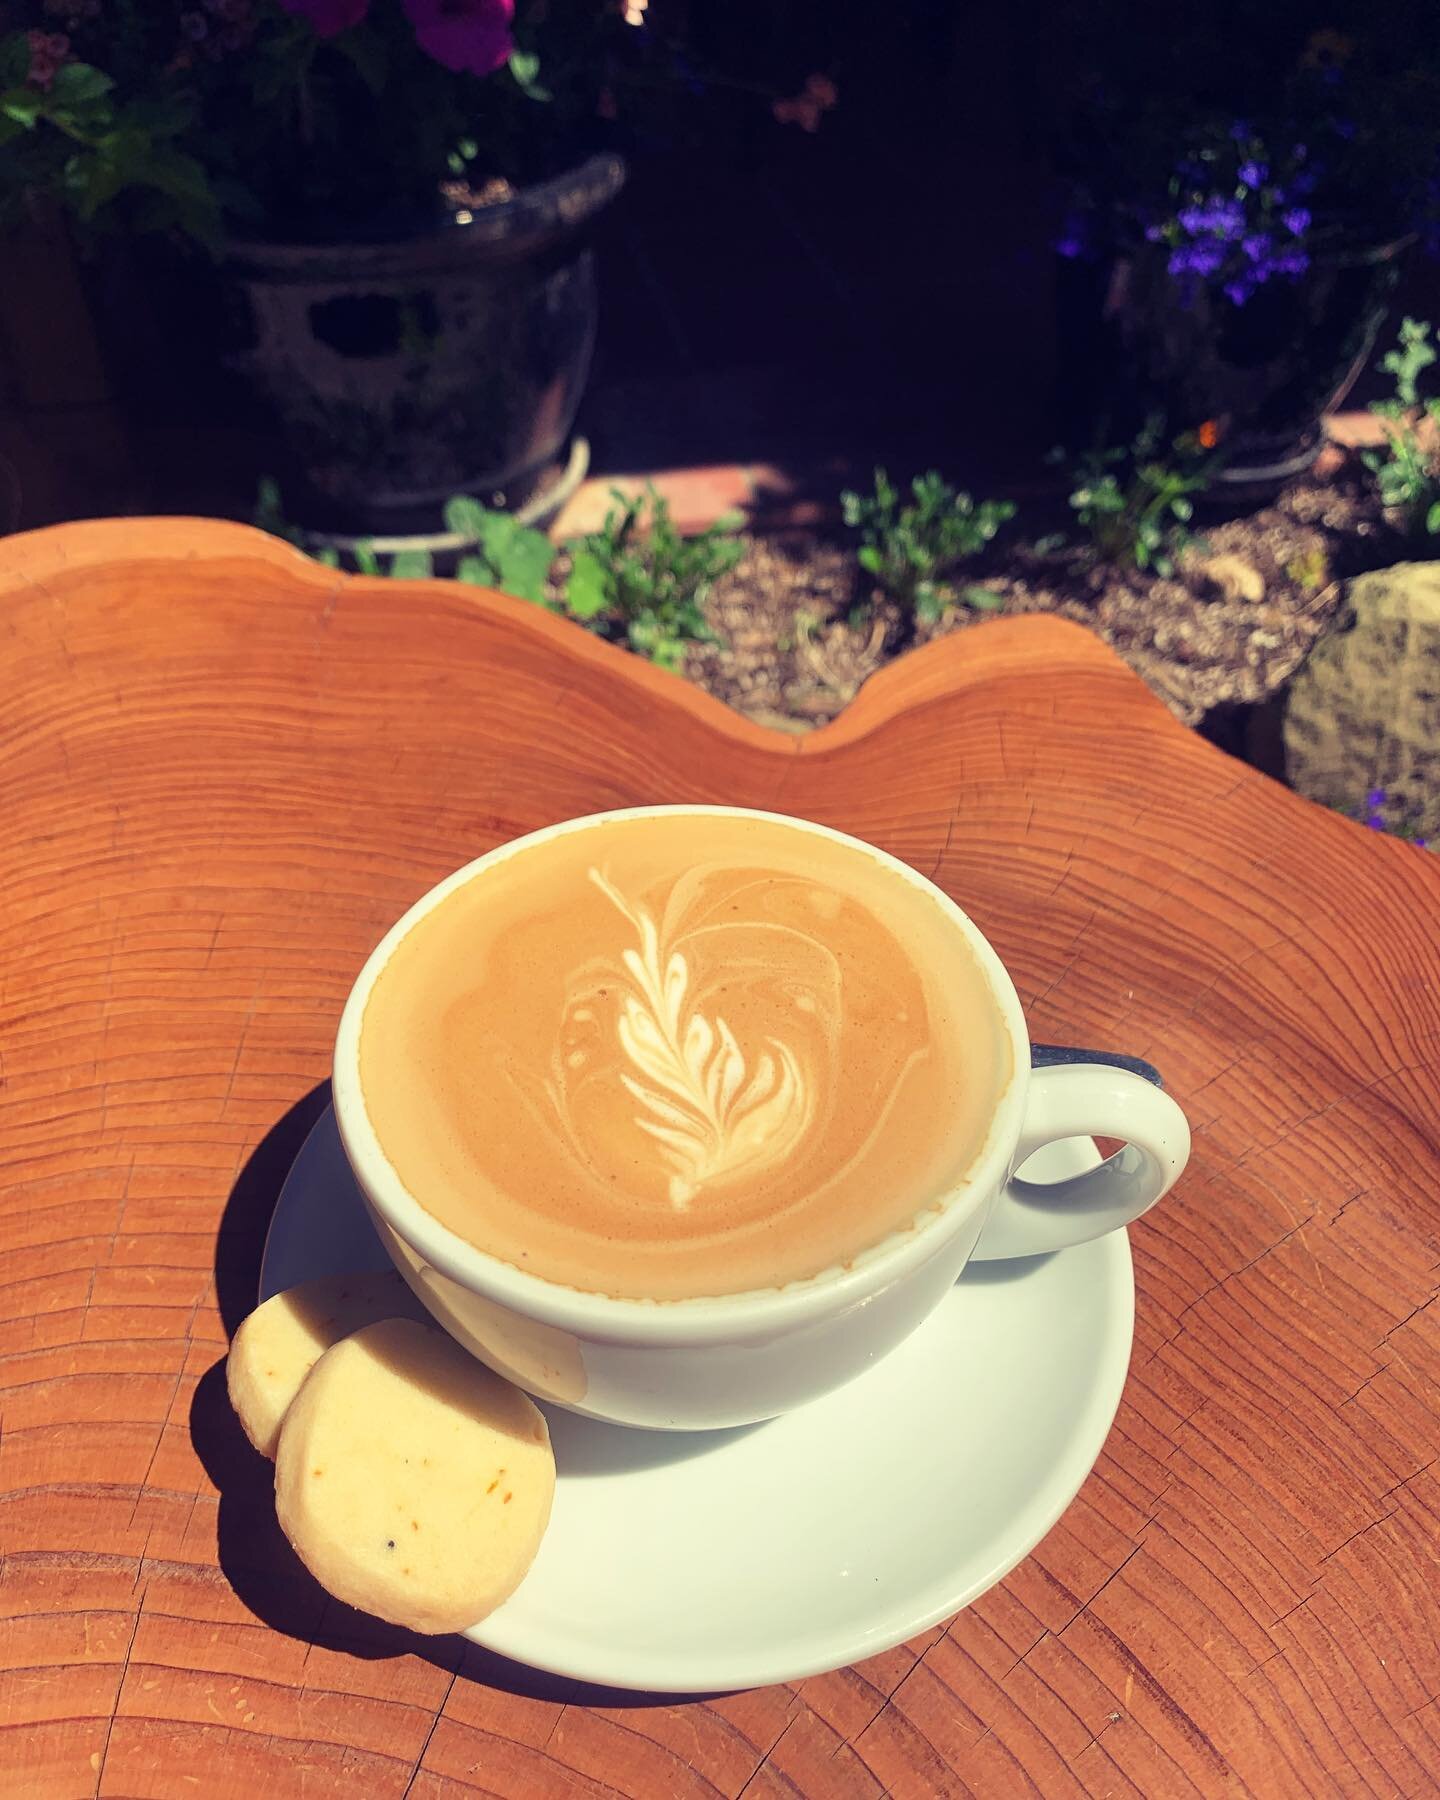 Now pulling some exquisite new espresso from @elysiancoffee 💜 My favourite shortbread creation yet - organic fresh lavender and orange zest! #galianoisland #southerngulfislandsbc #organic #sunnypatio